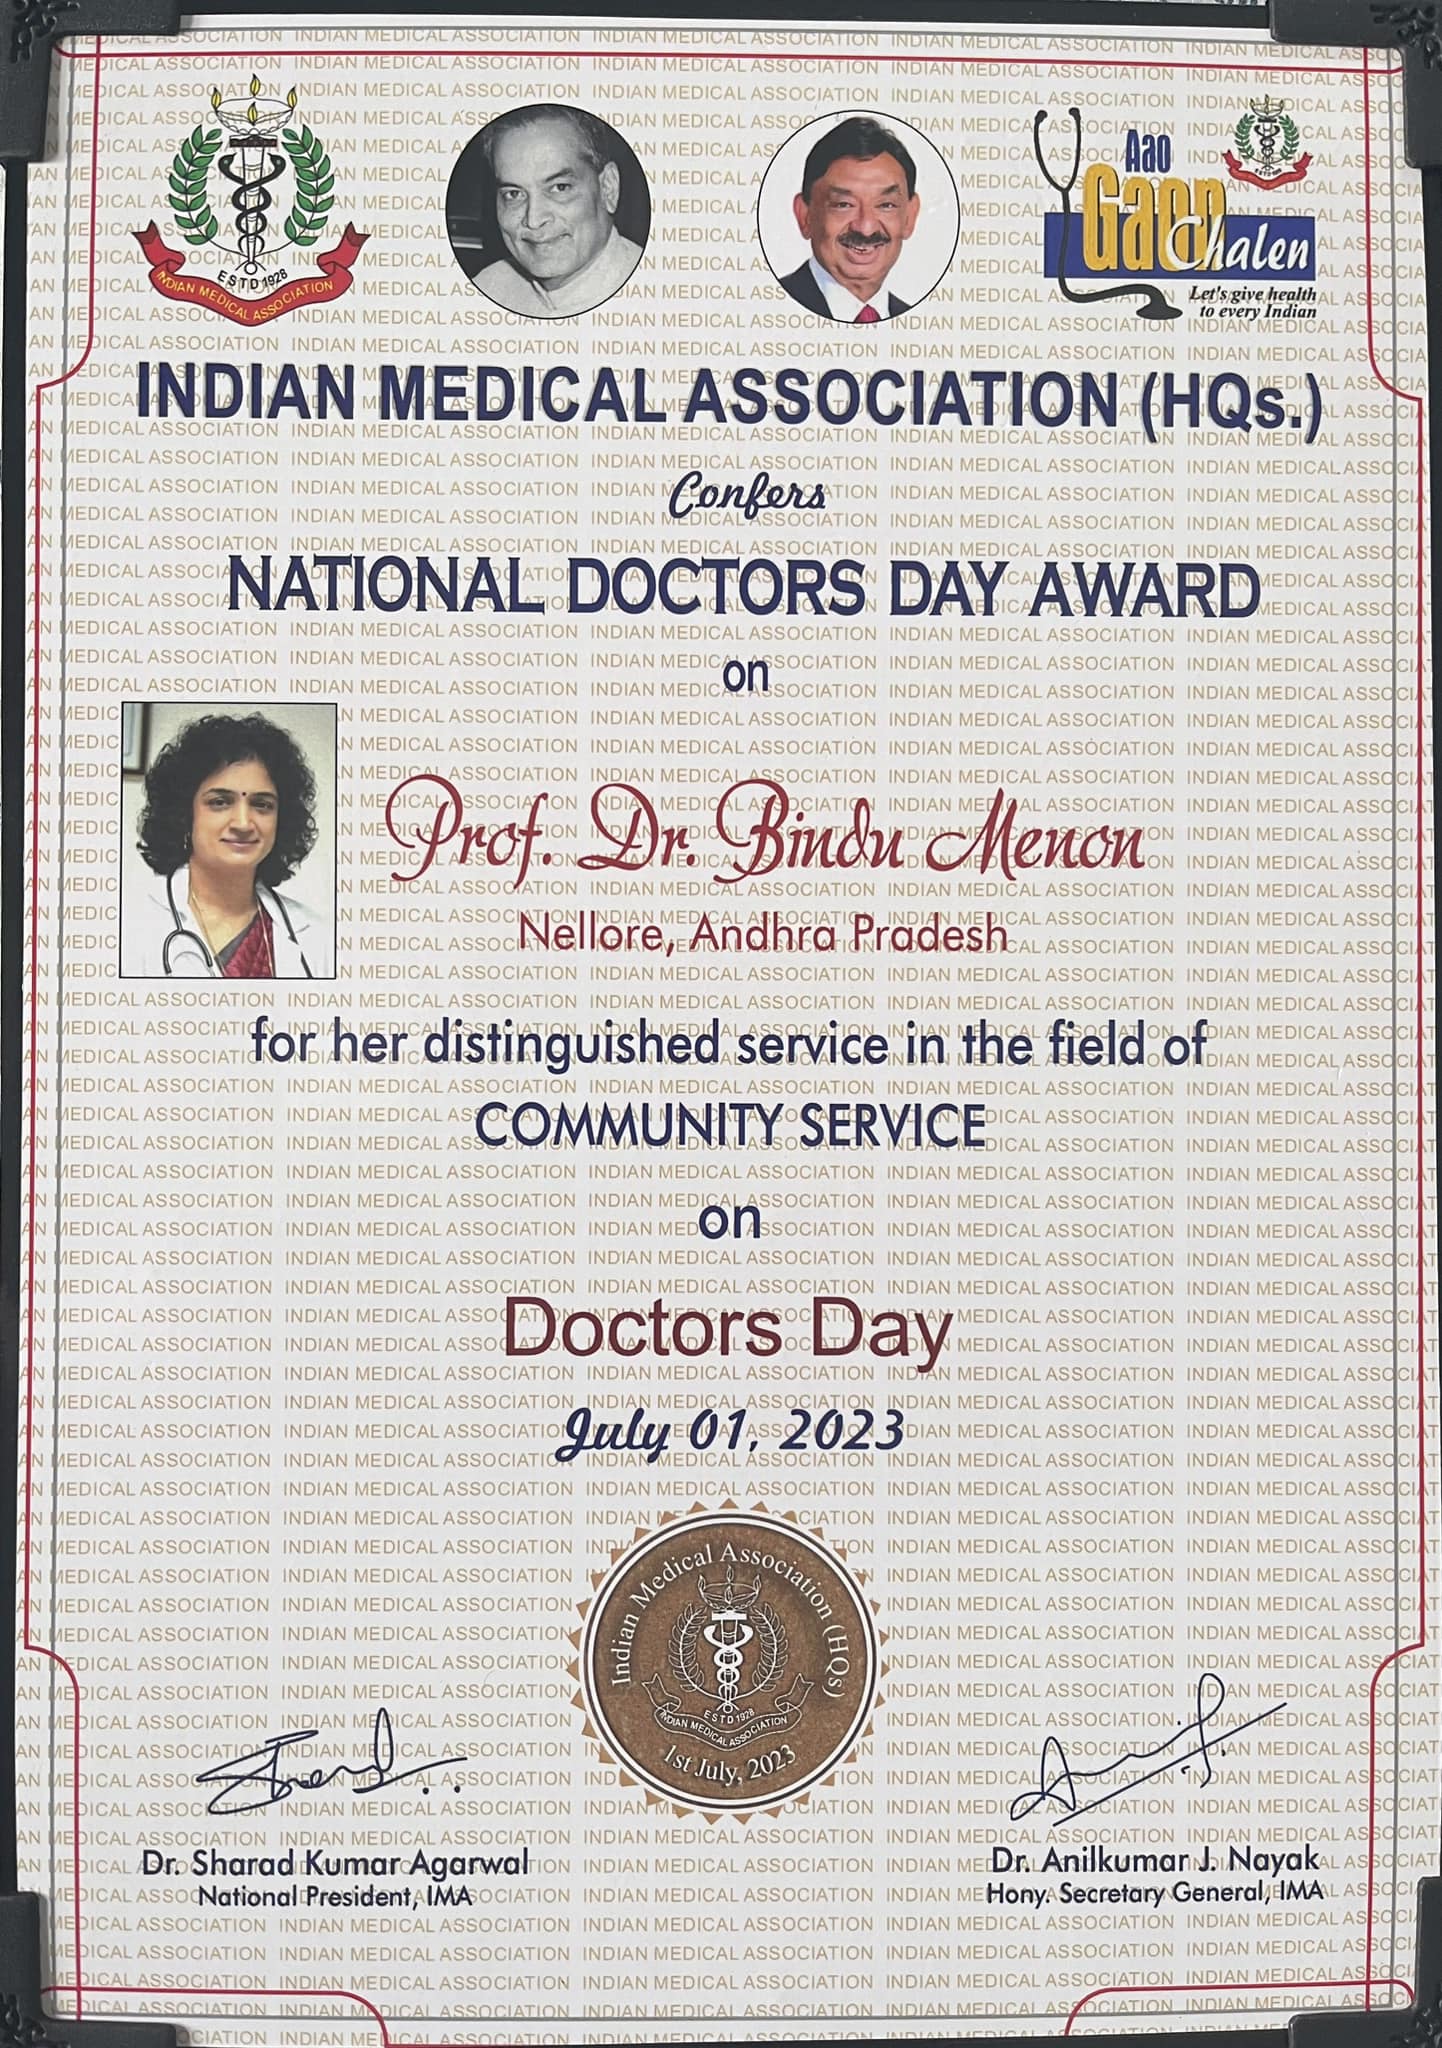 National Indian Medical Association Doctors Day Award 2023